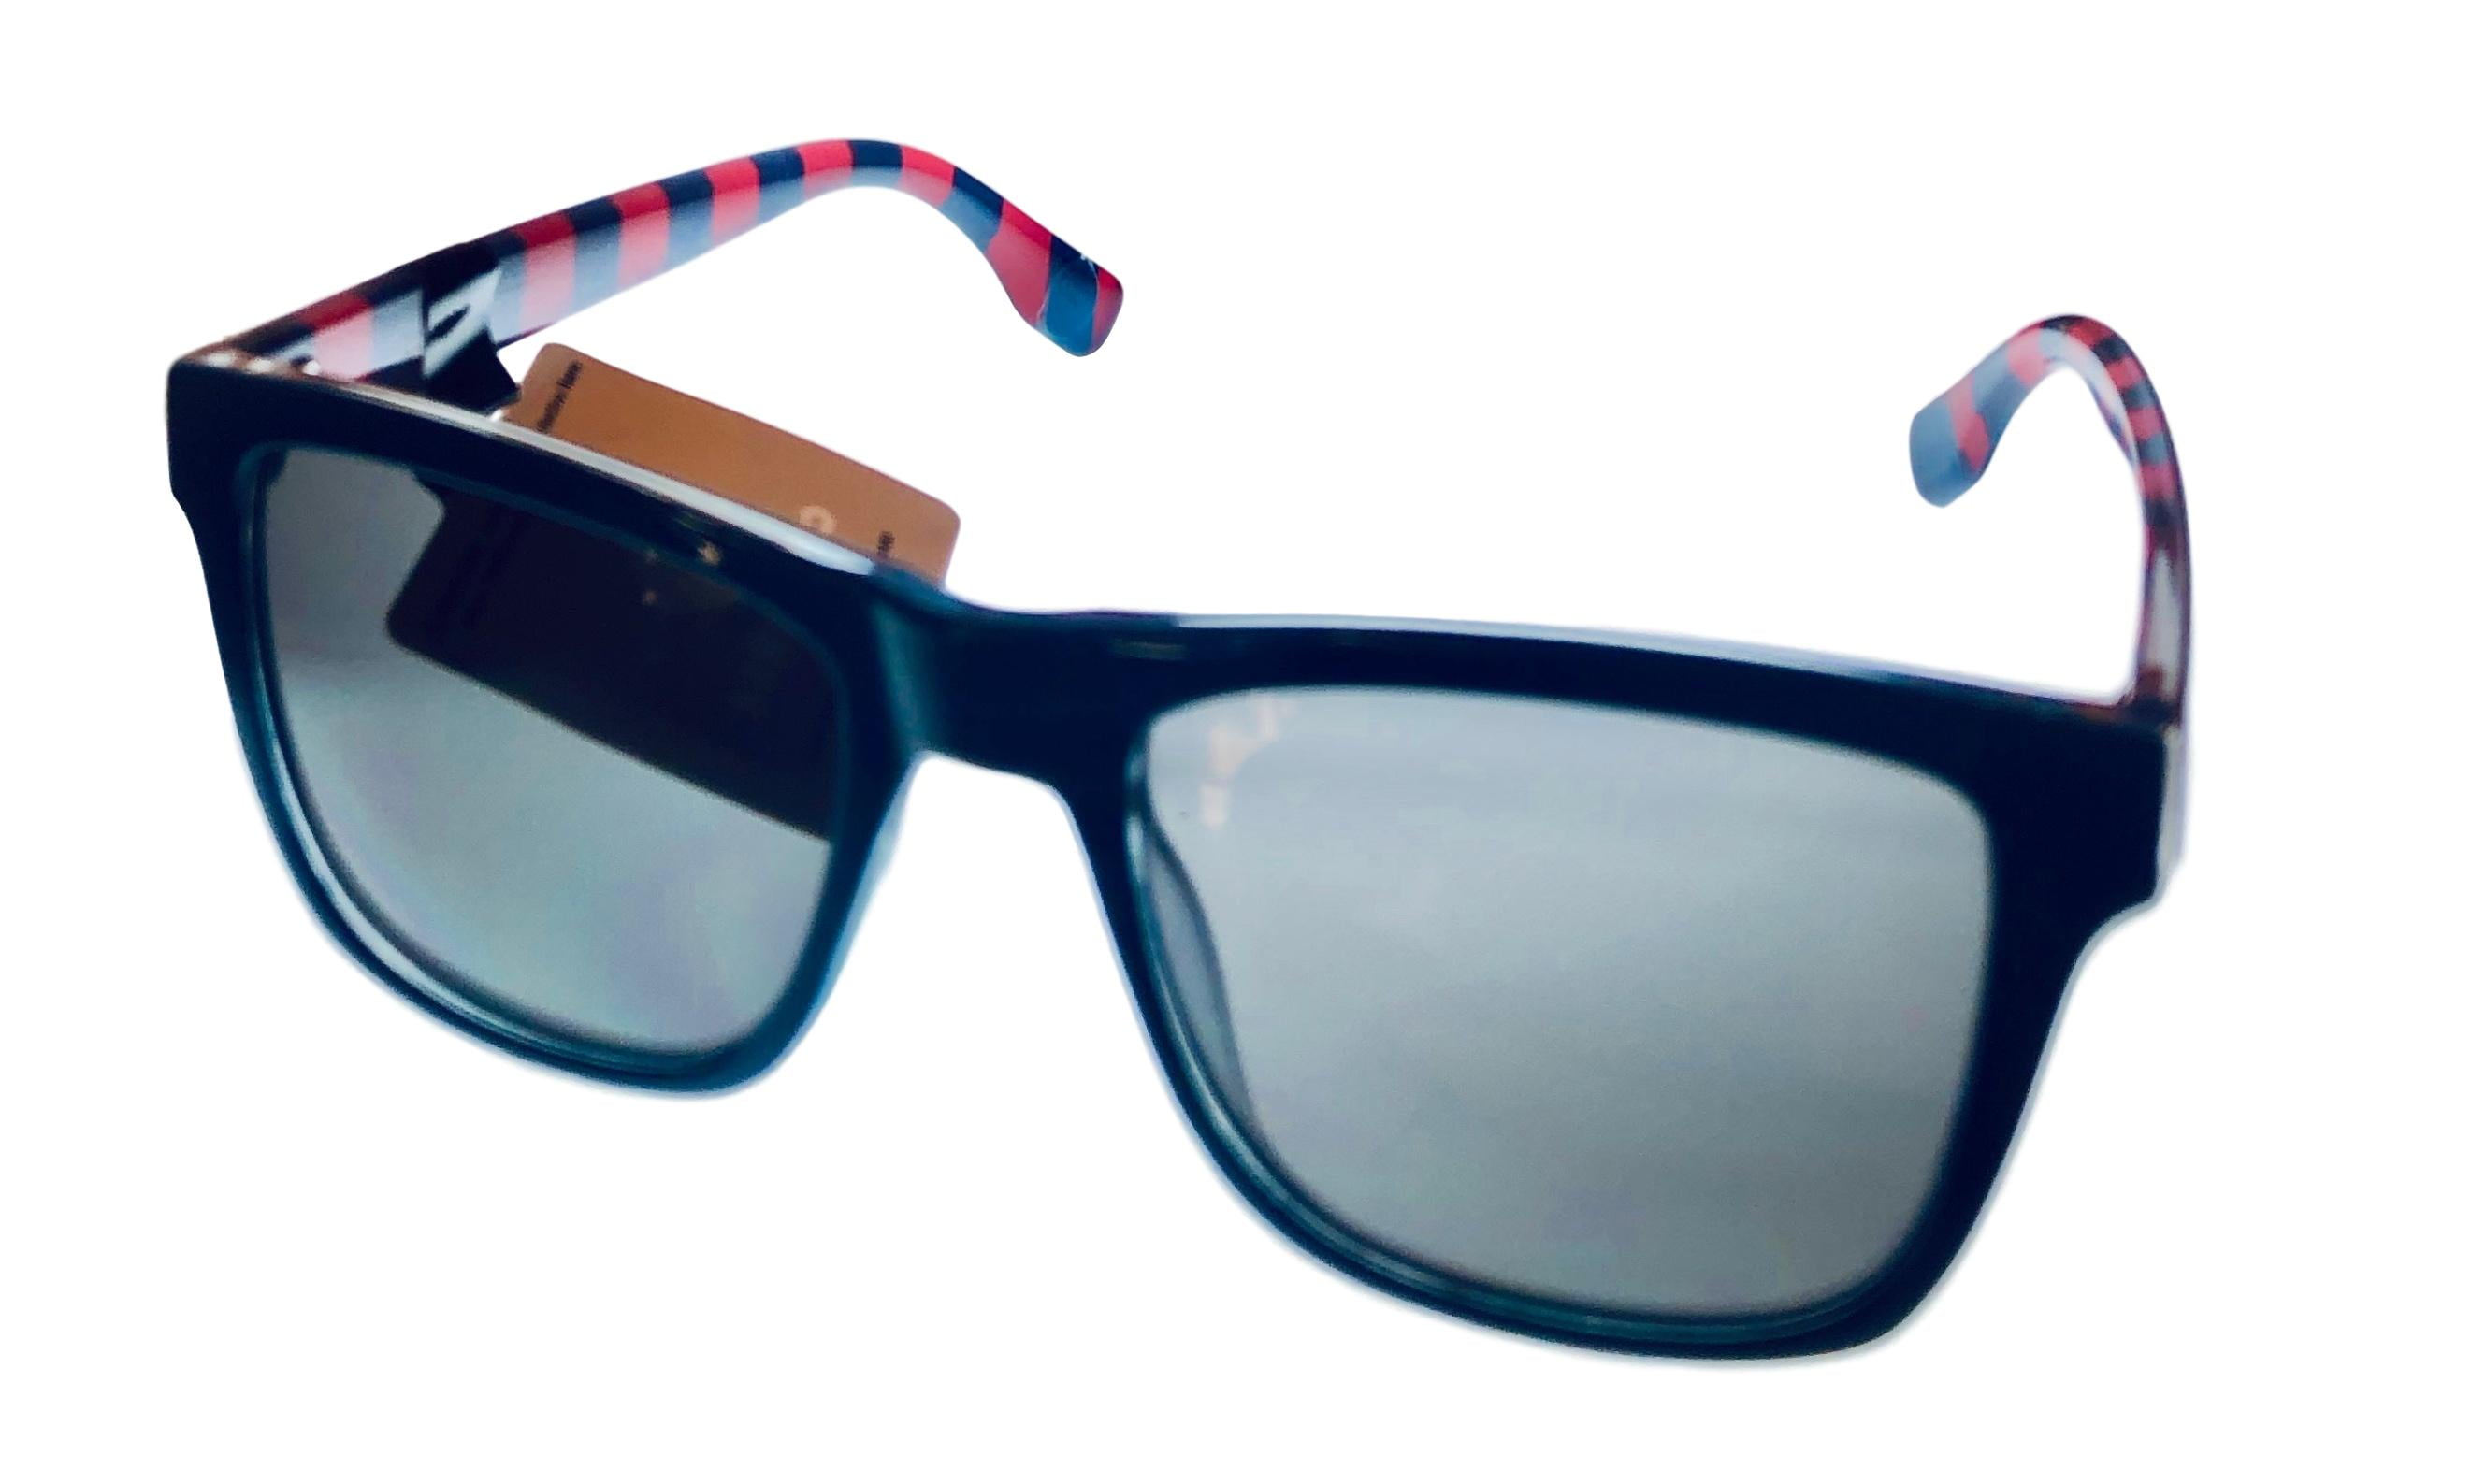 converse sunglasses price